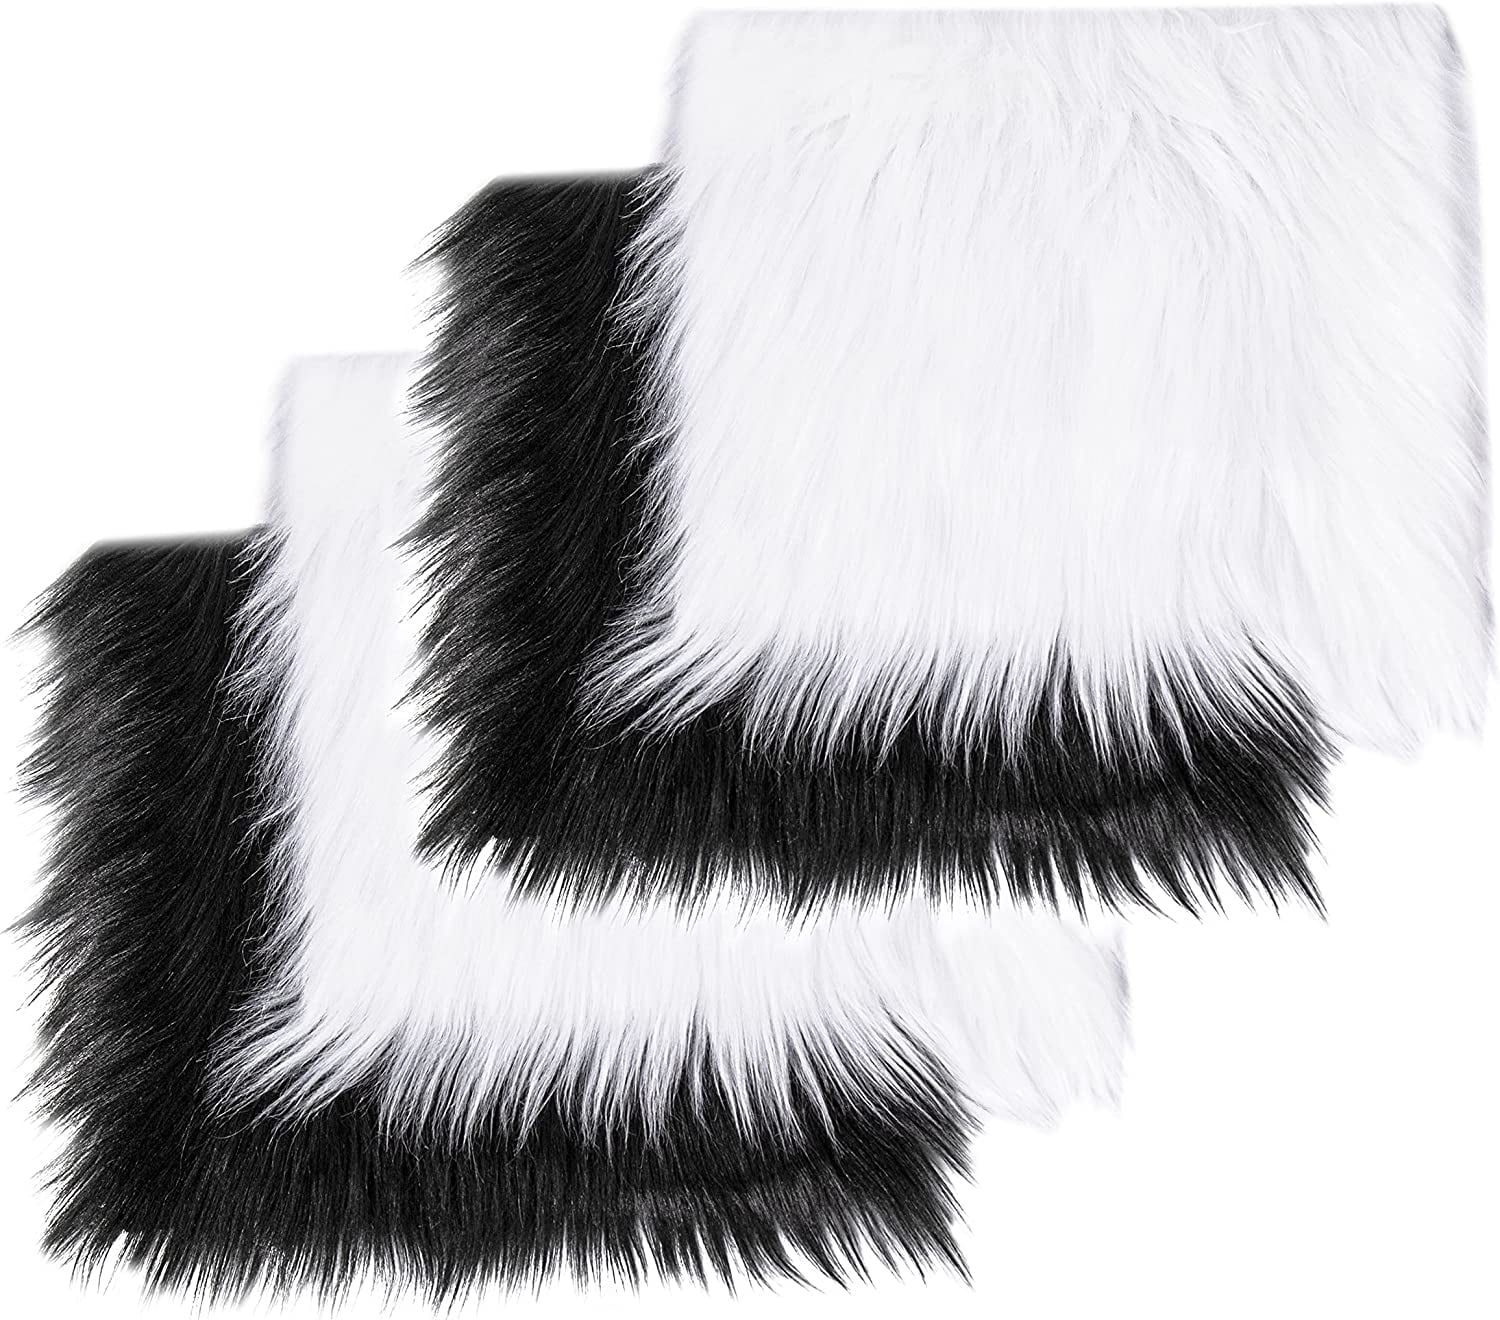  Luxury Shag Faux Fur Fabric (Black) : Clothing, Shoes & Jewelry